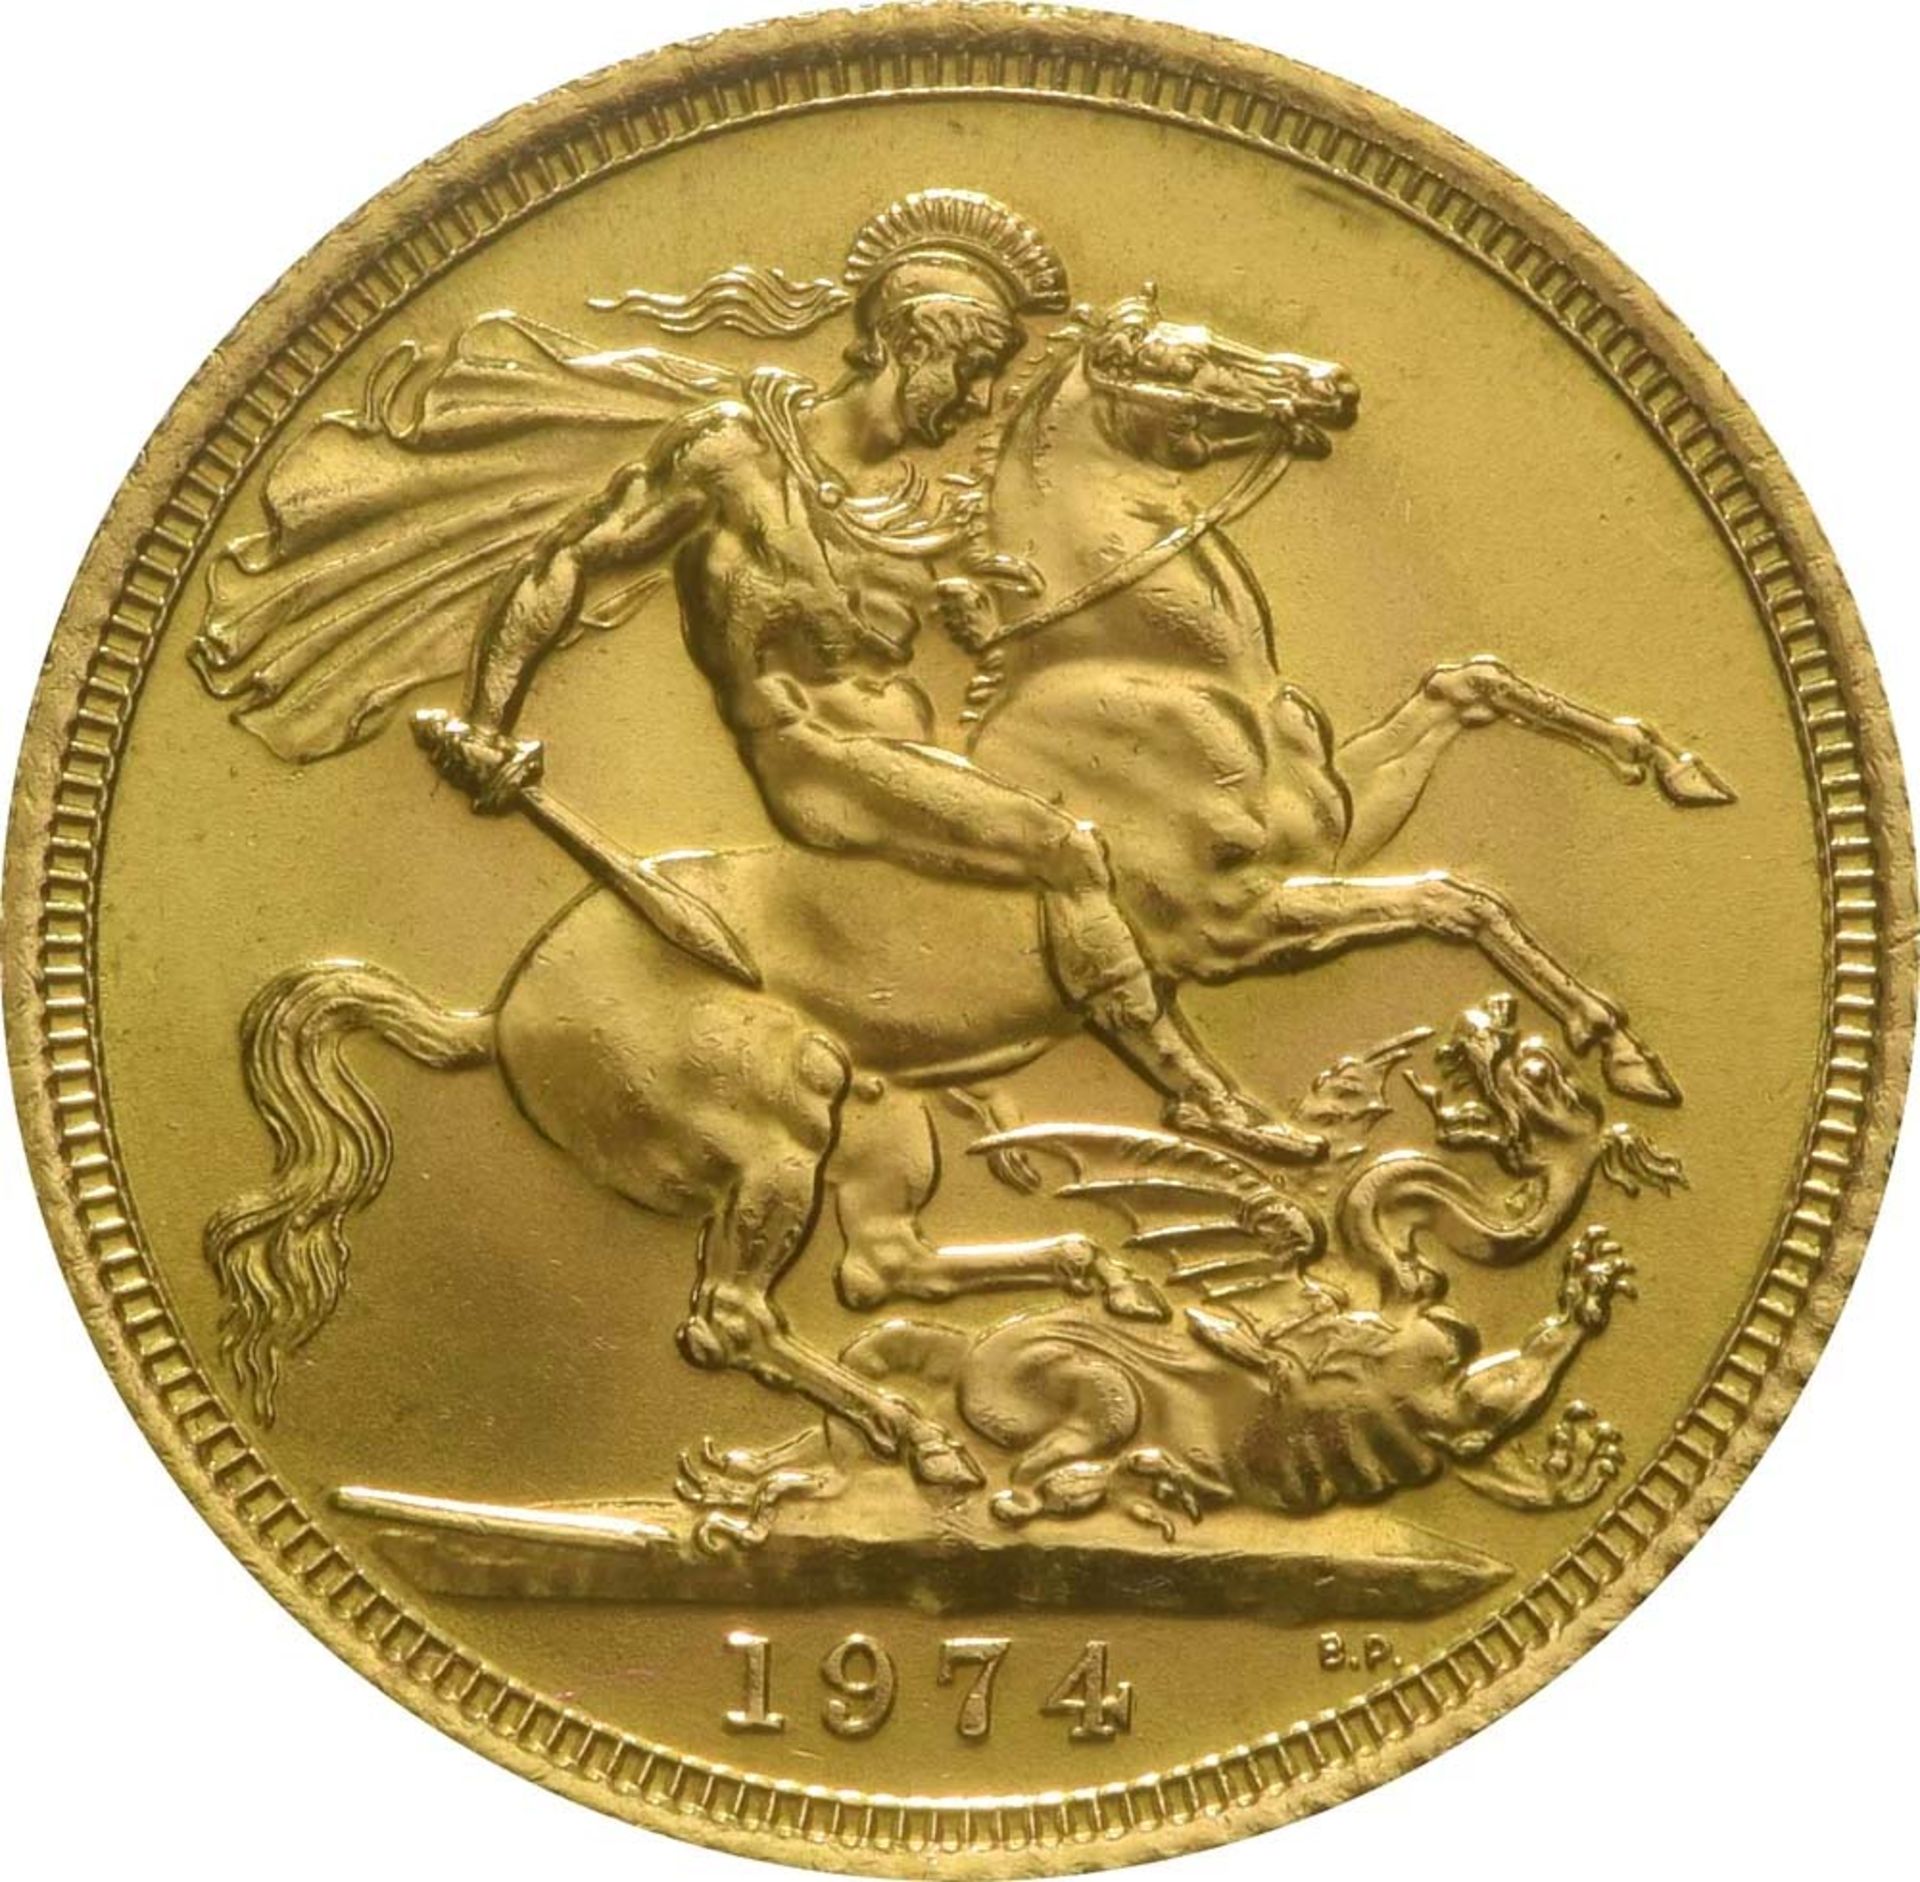 1974 Full QE II Gold Soverign - Image 2 of 2